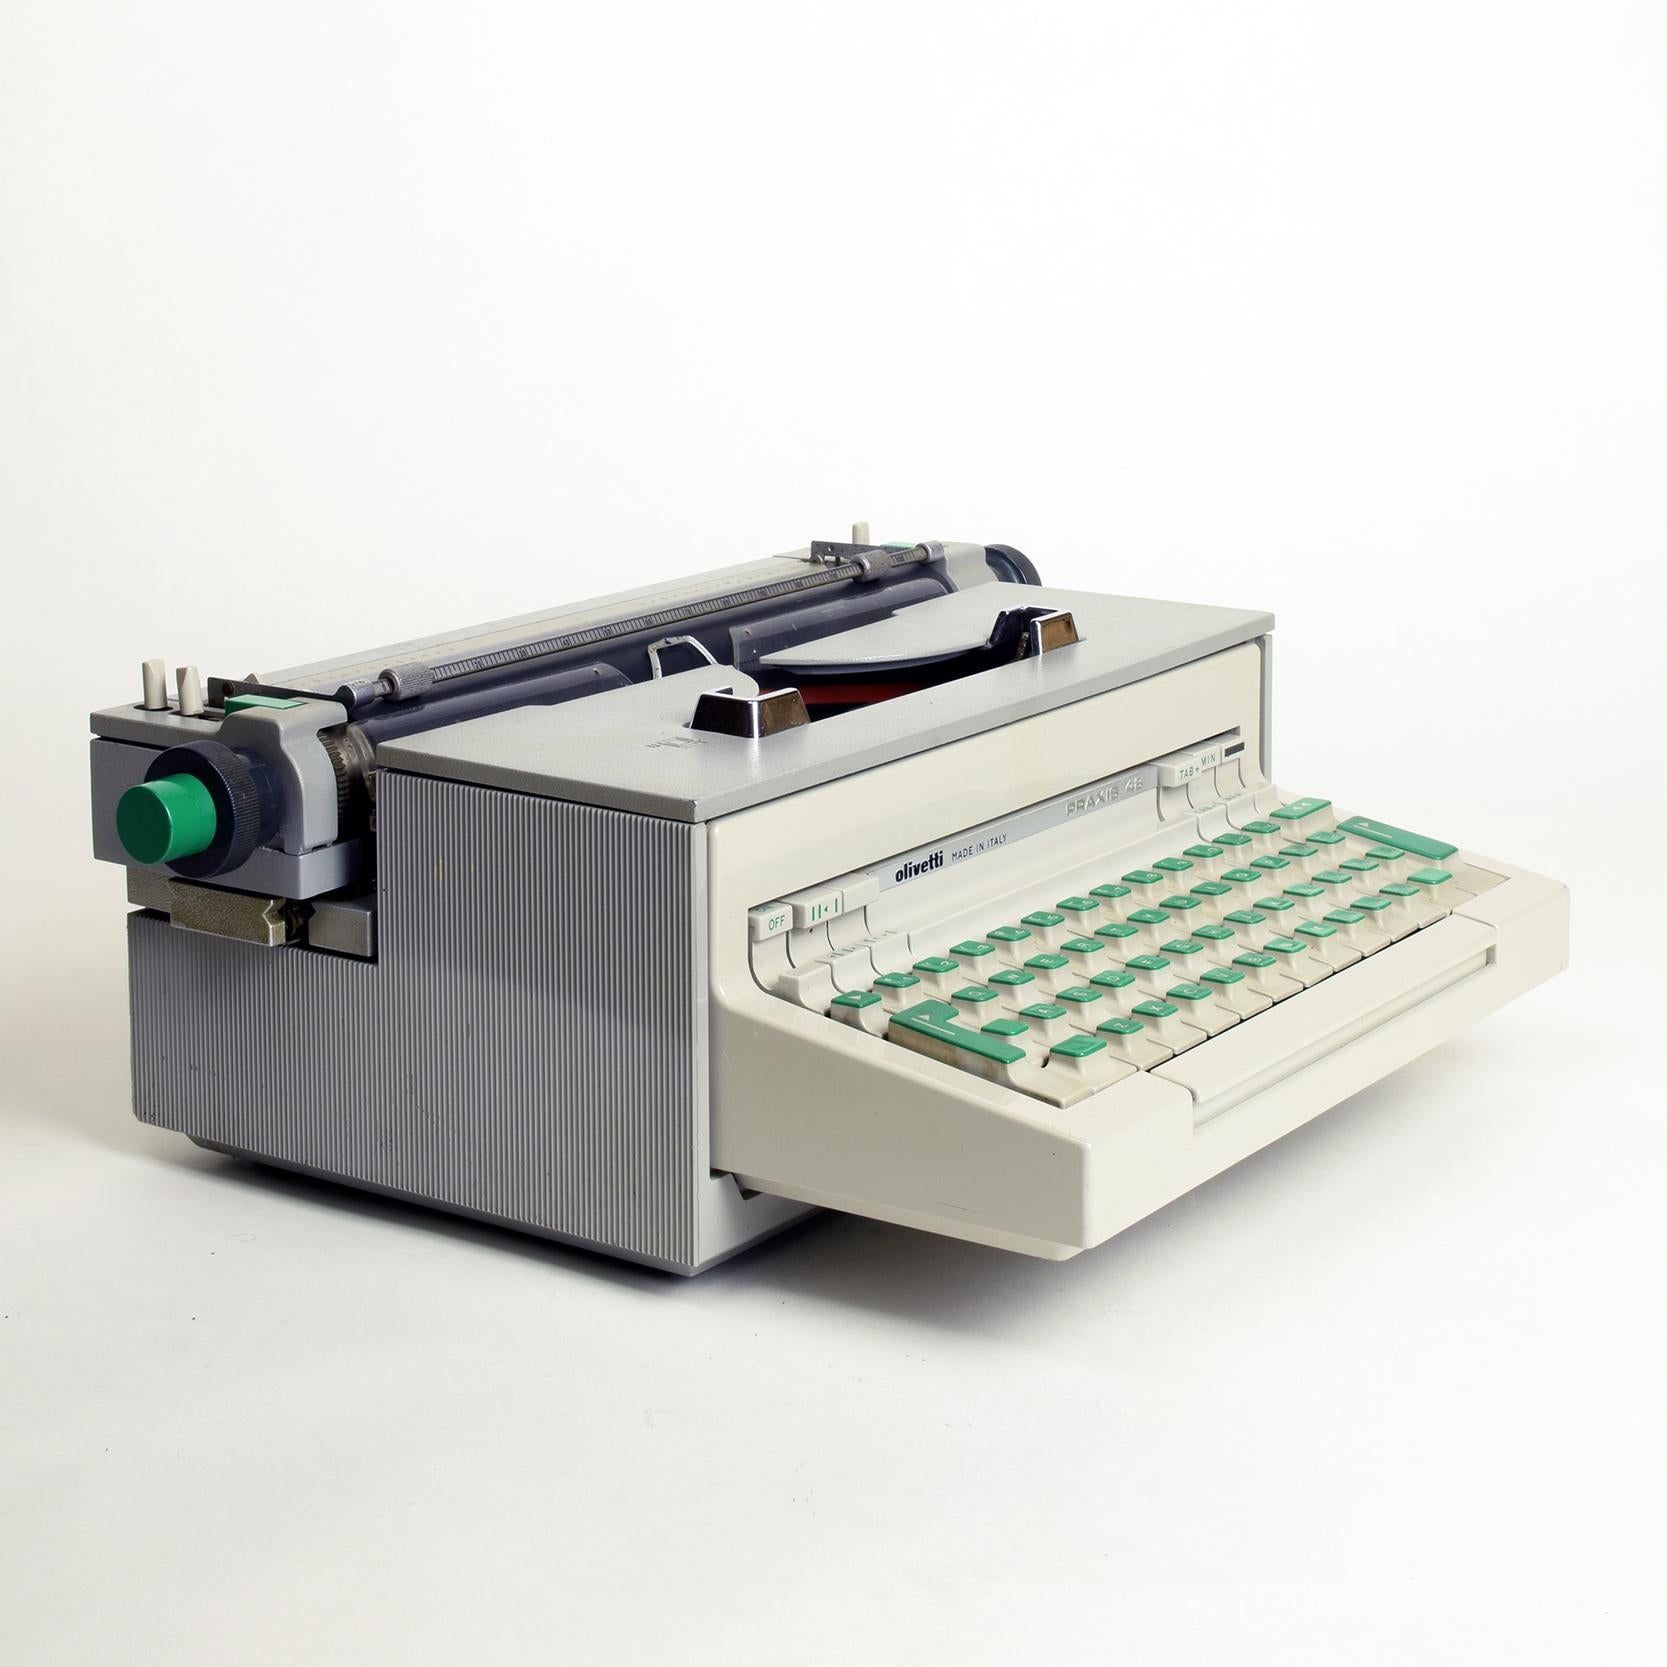 Italian Ettore Sottsass & Hans Von Klier, ‘Praxis 48’ Typewriter, Olivetti, 1964